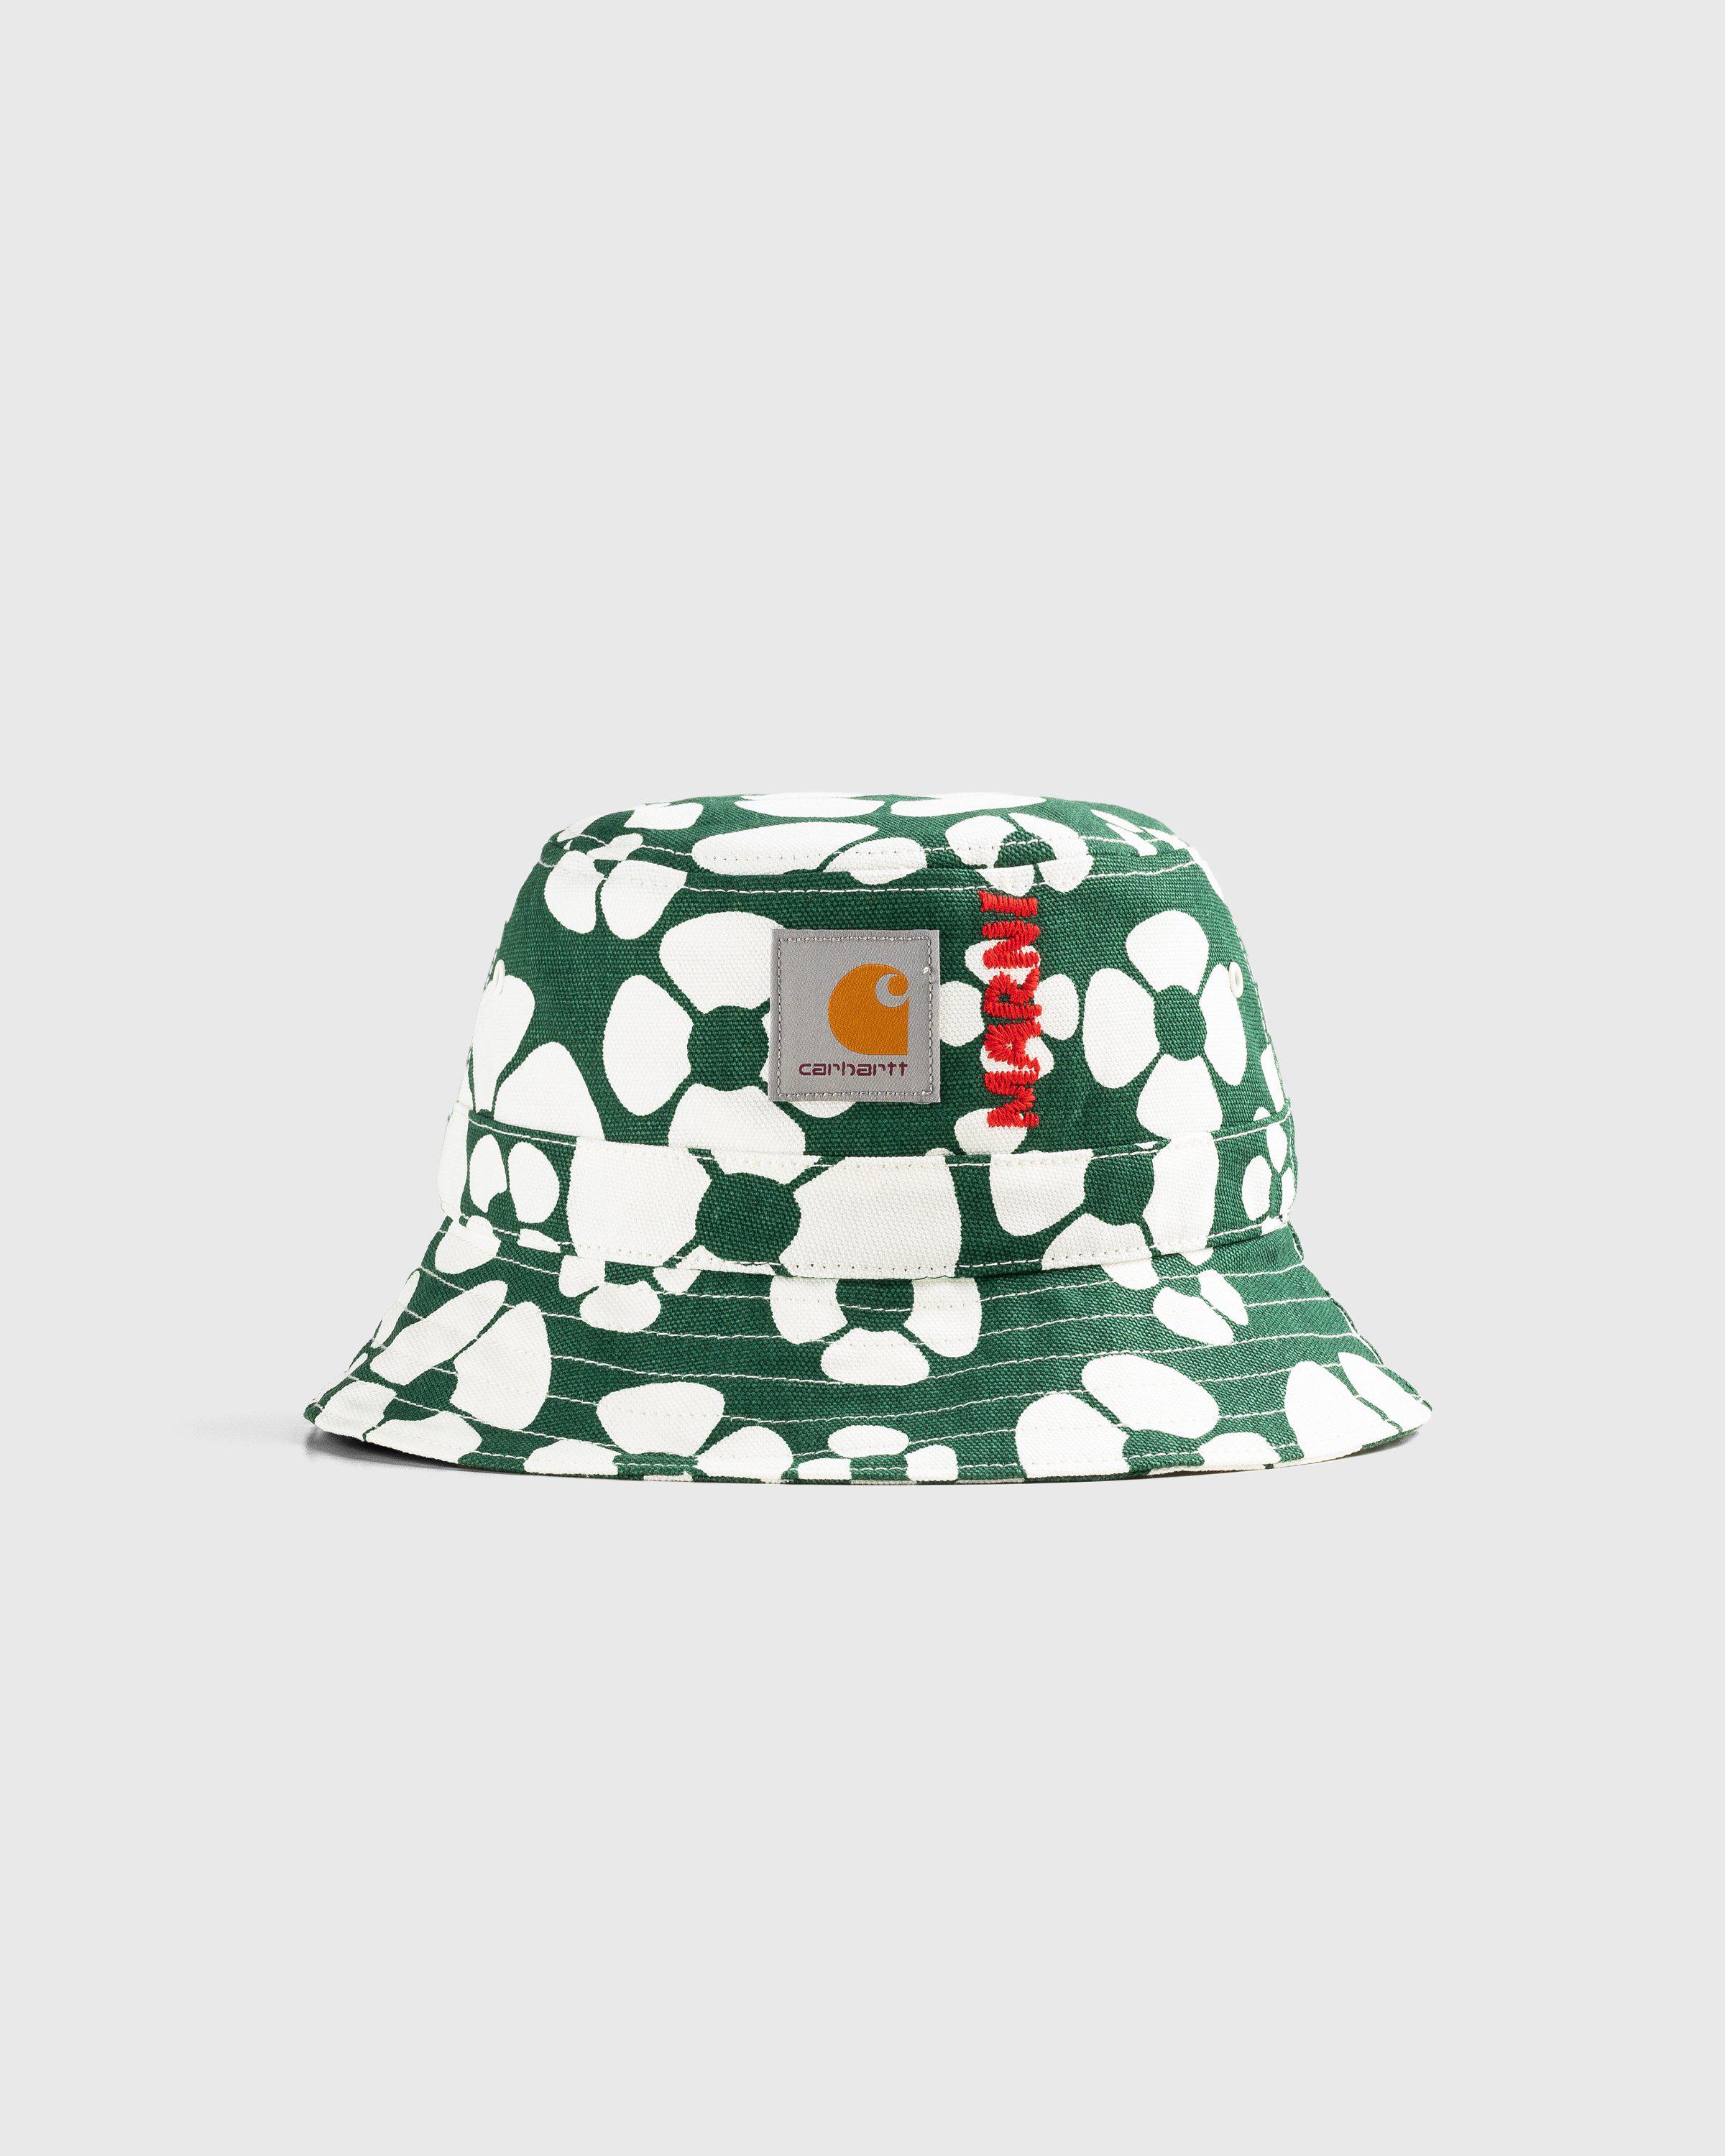 Marni x Carhartt WIP – Floral Bucket Hat Green by MARNI X CARHARTT WIP